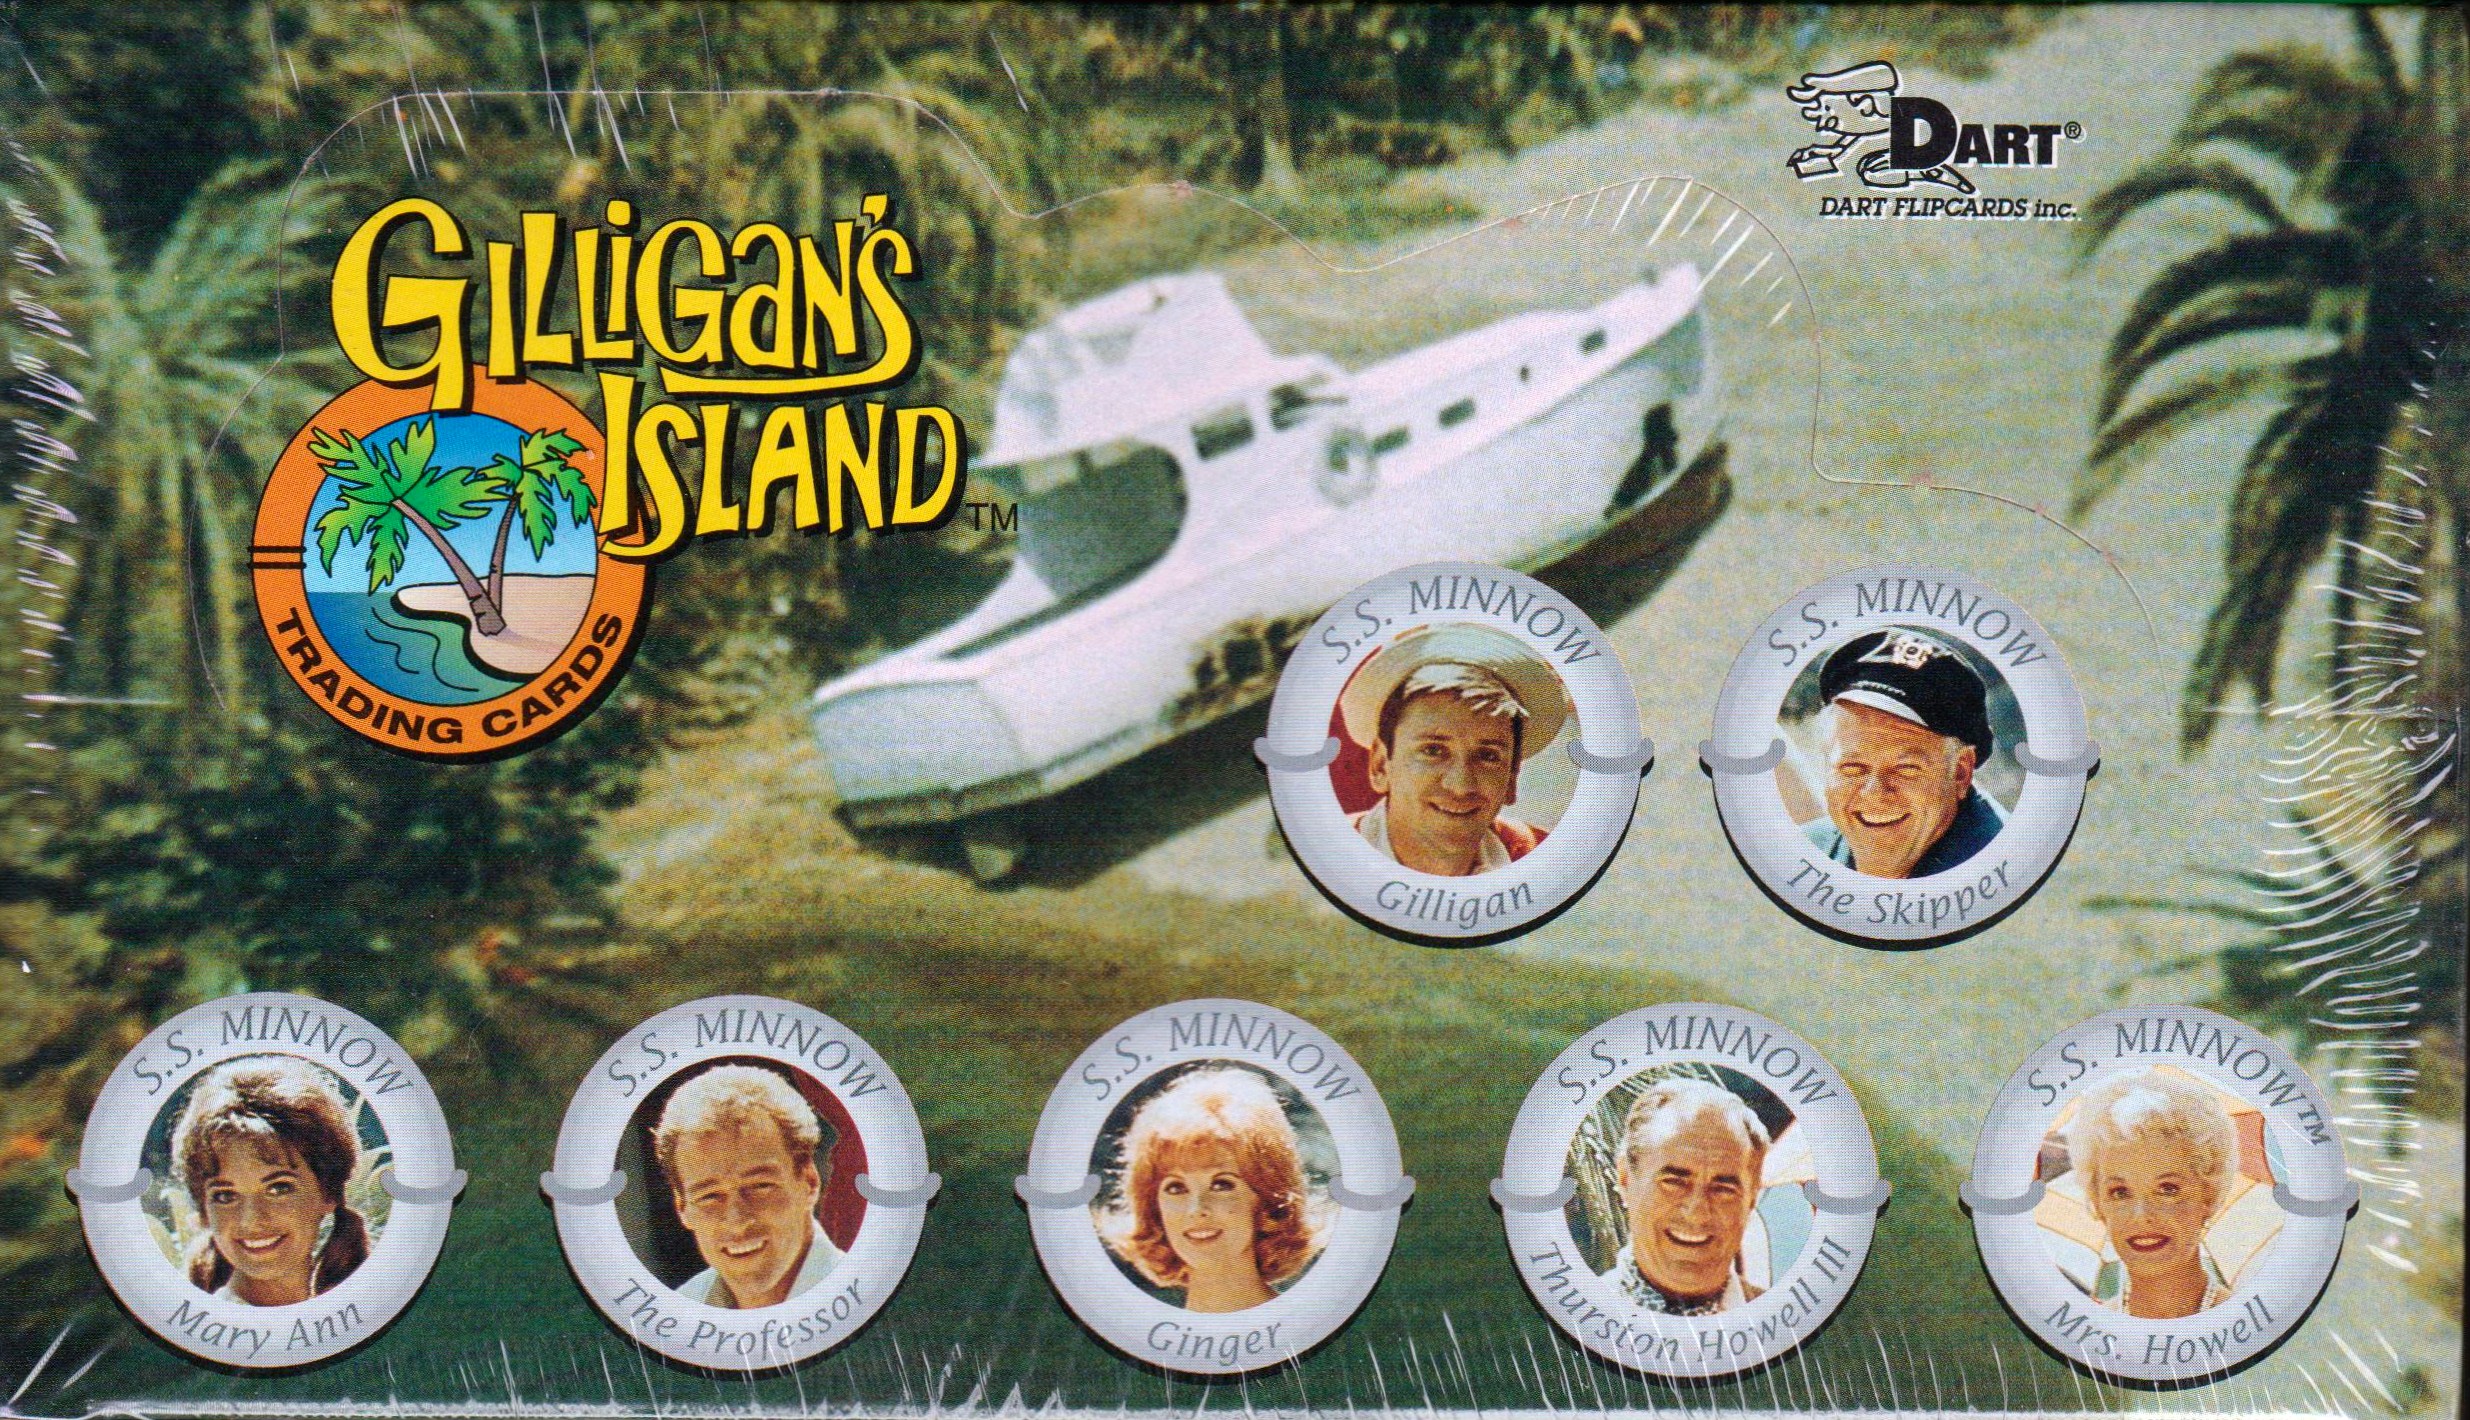 Image result for gilligan's island